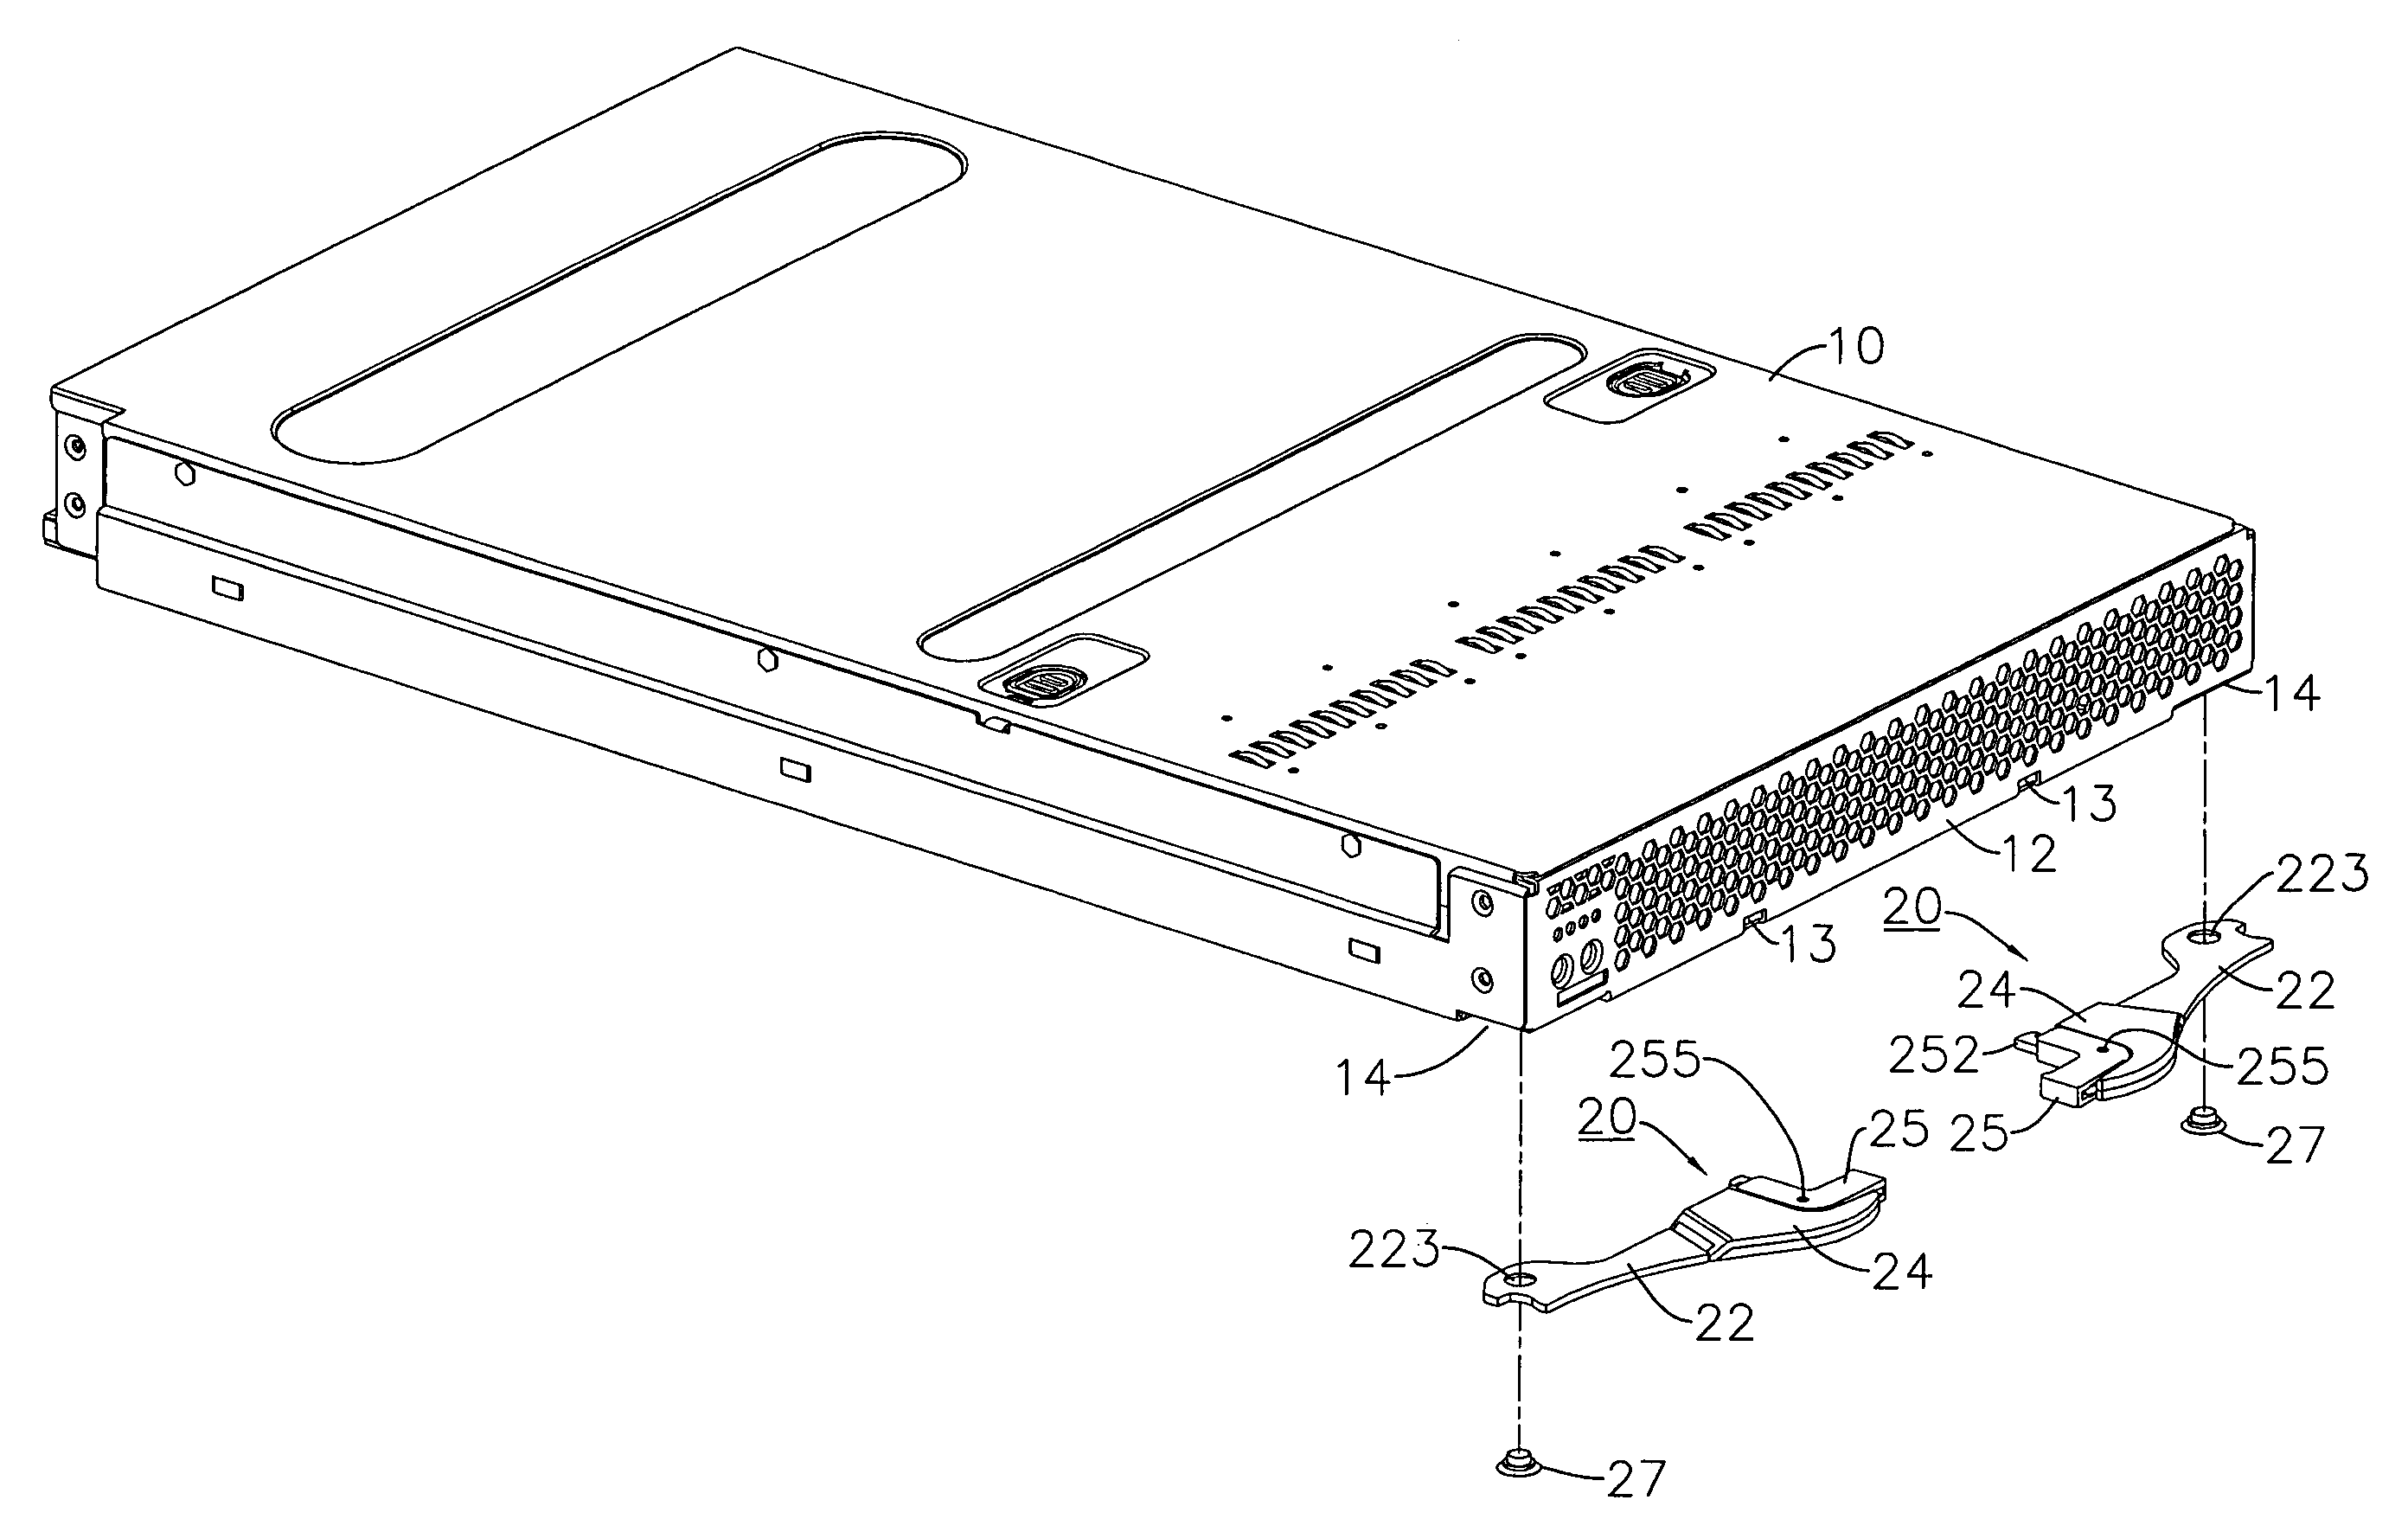 Modular case handle positioning device